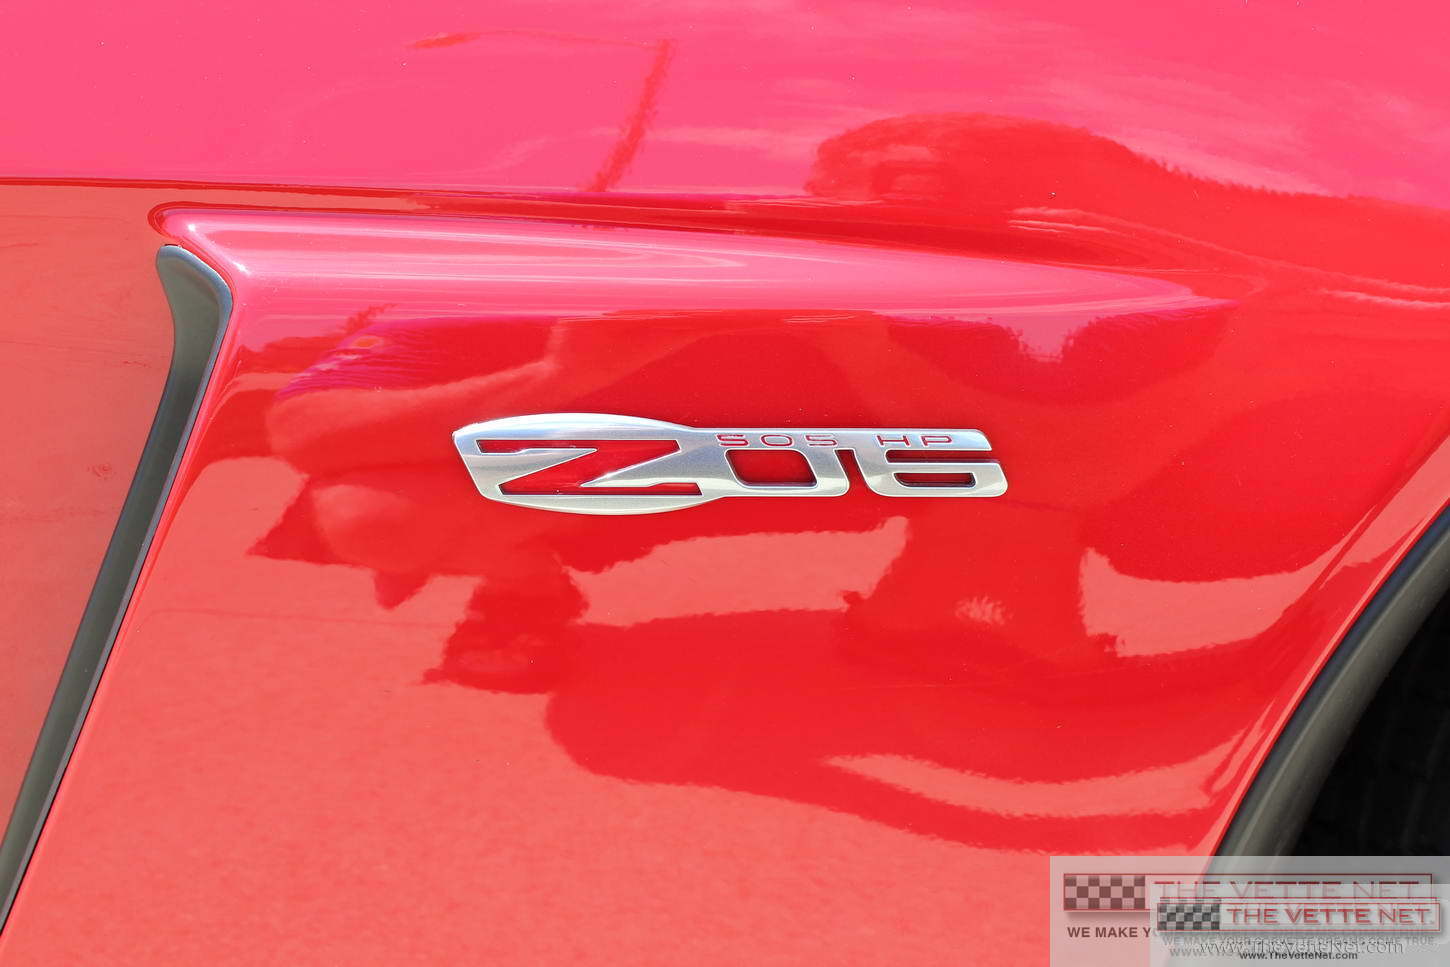 2007 Corvette Hardtop Victory Red